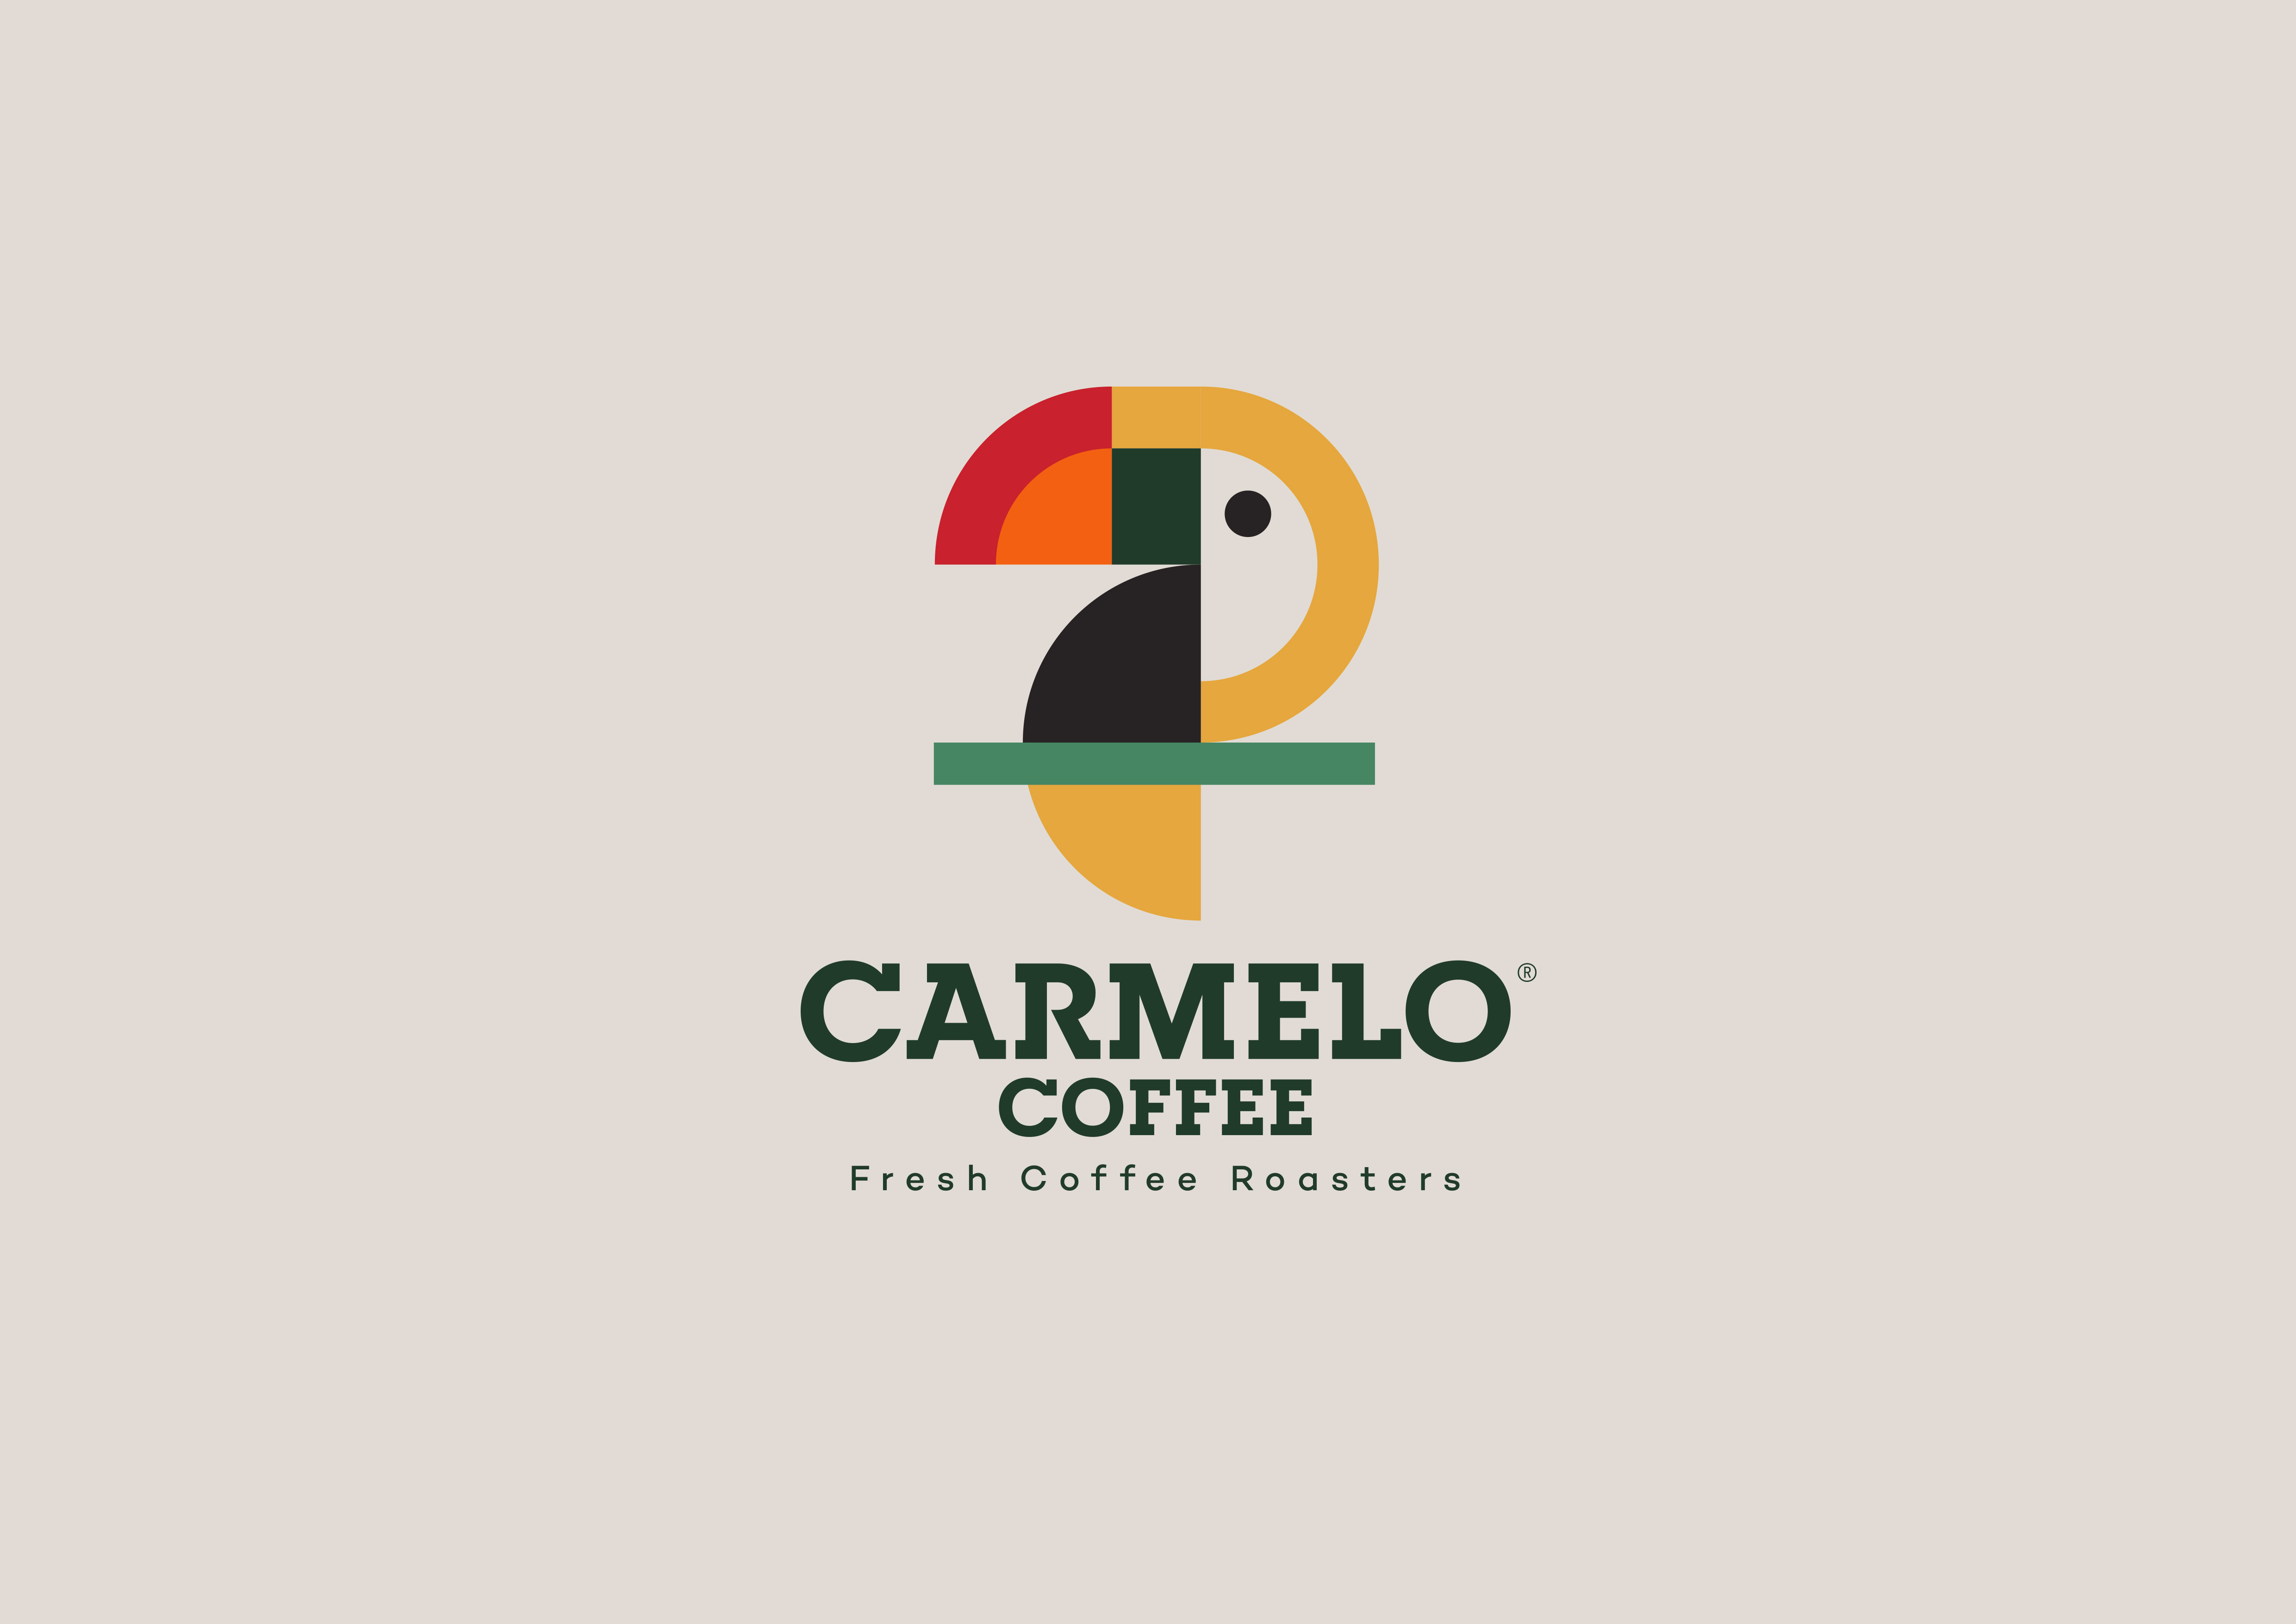 CARMELO_KARBON_GMK_01_A3_02 copy